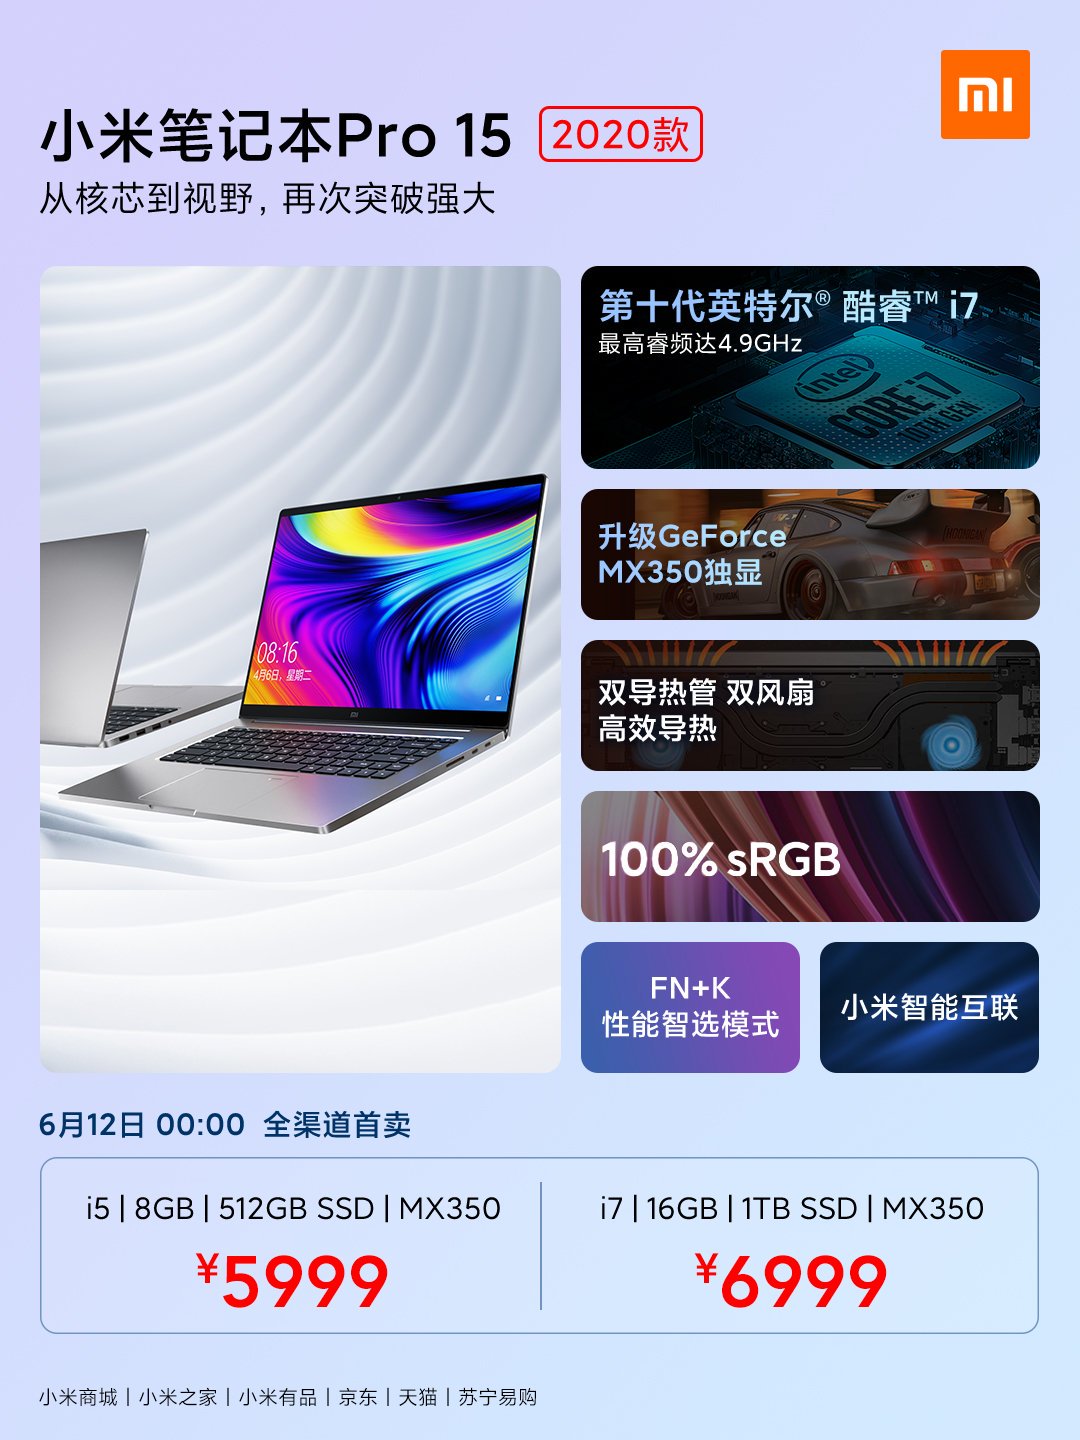 Mi NoteBook Pro 15 2020 07